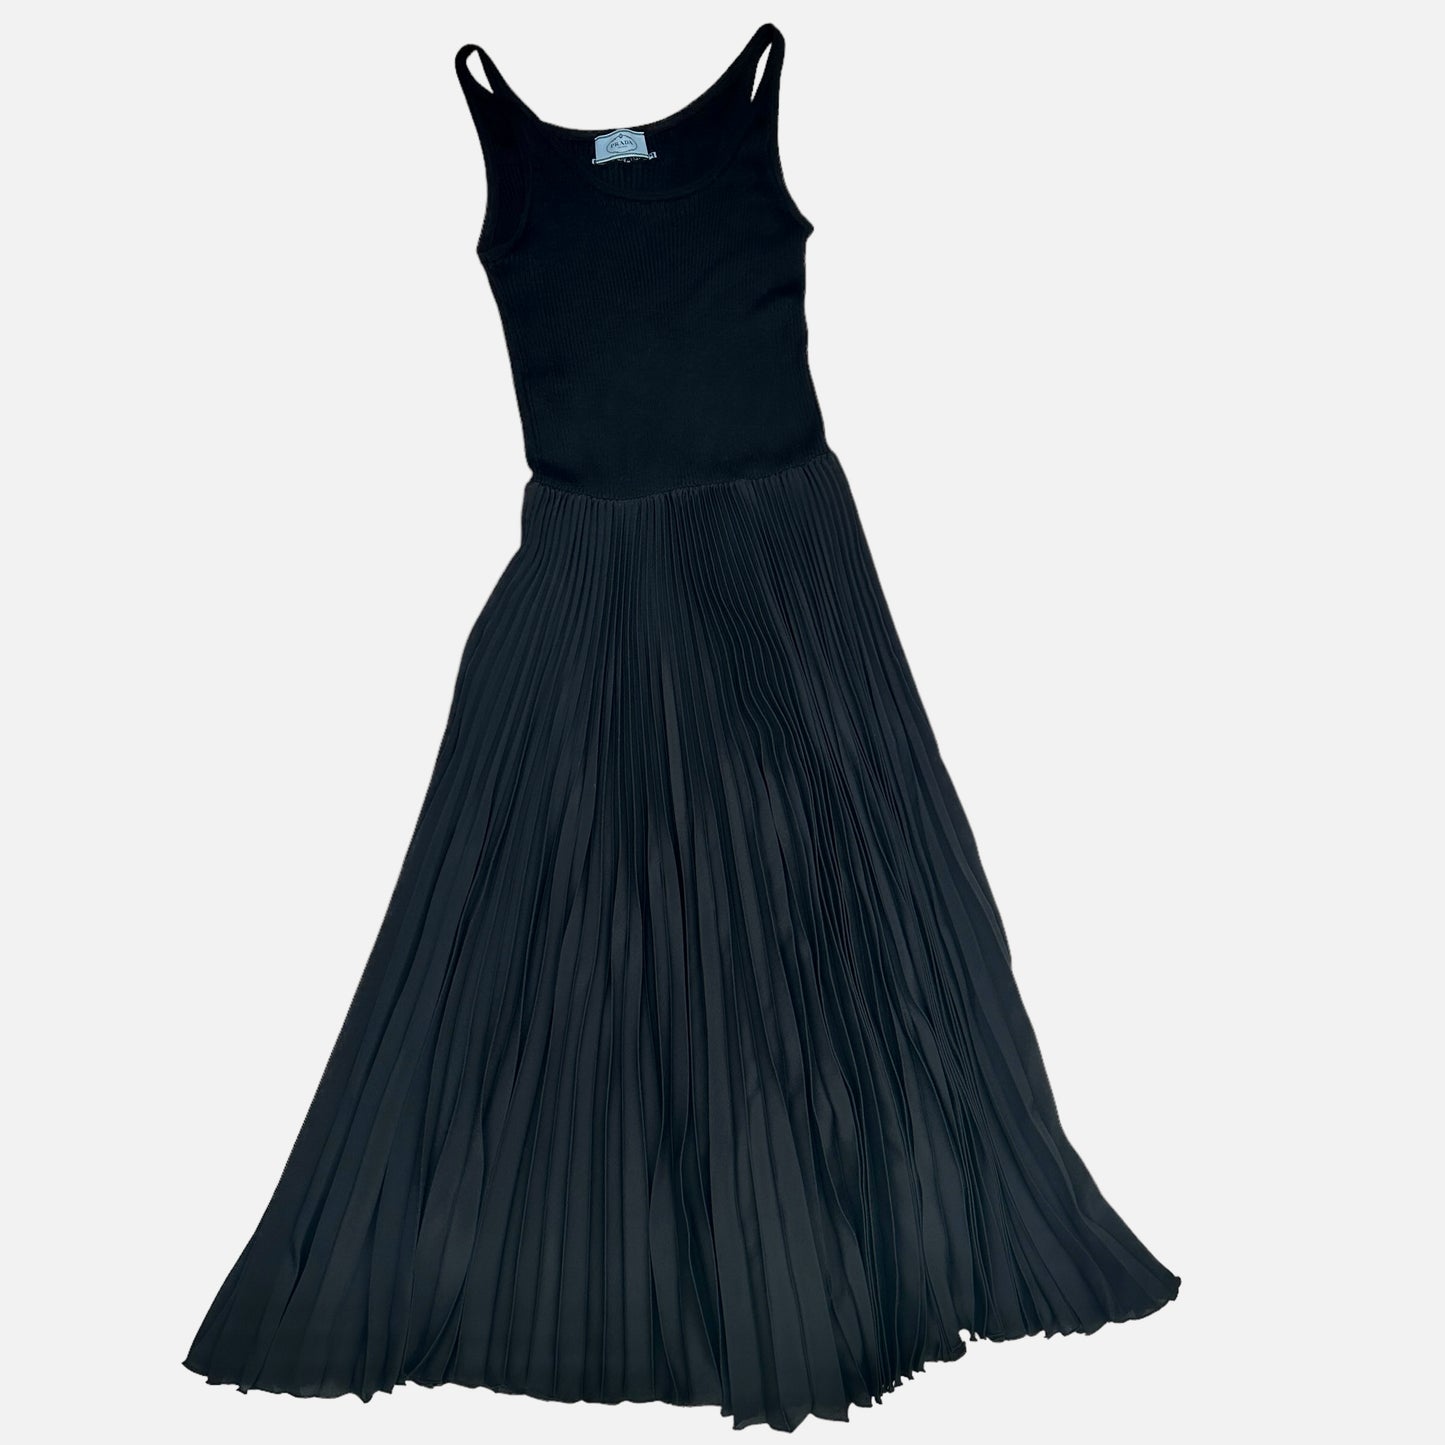 Black Pleated Dress - M